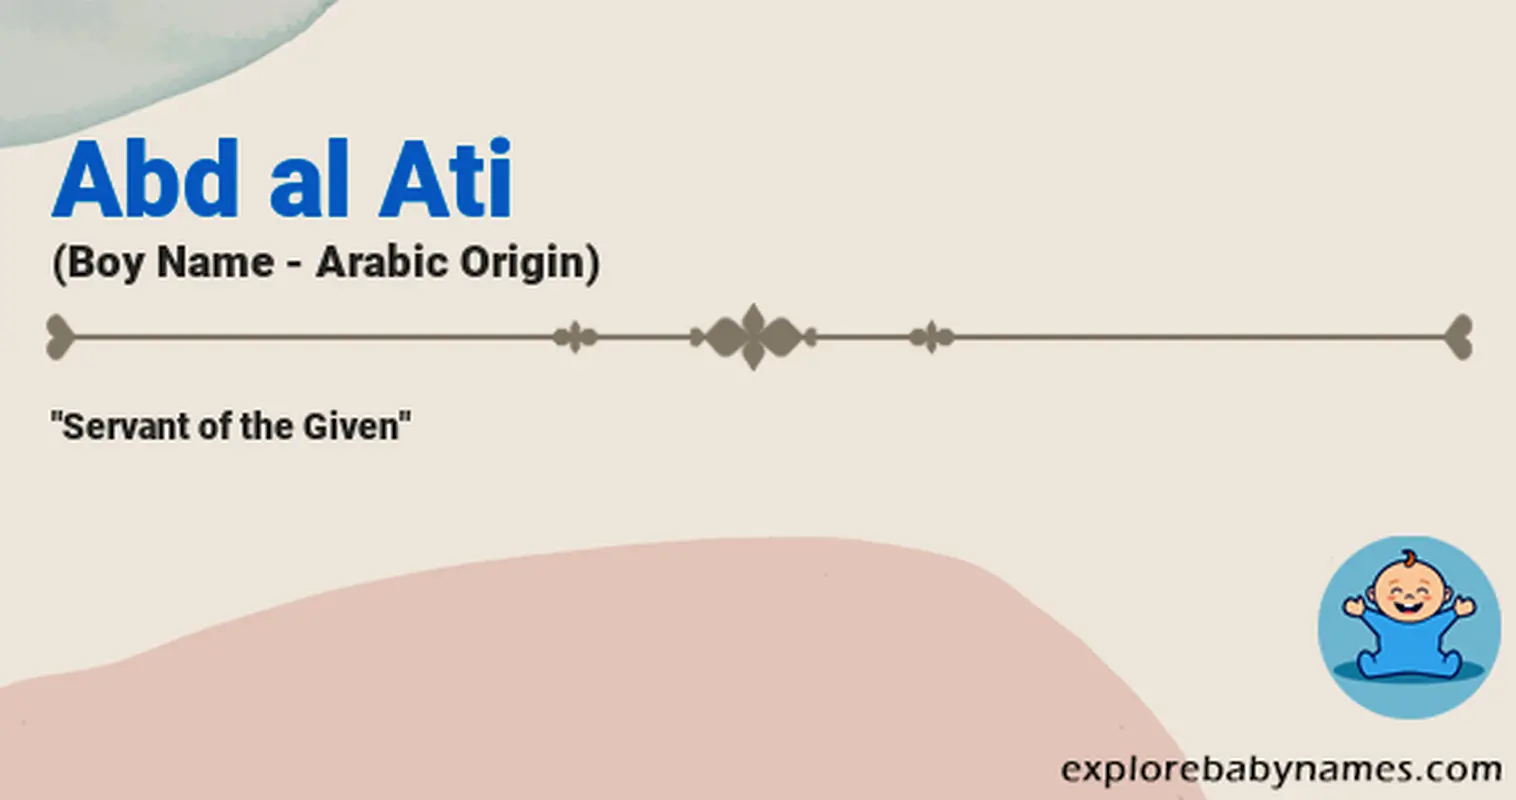 Meaning of Abd al Ati